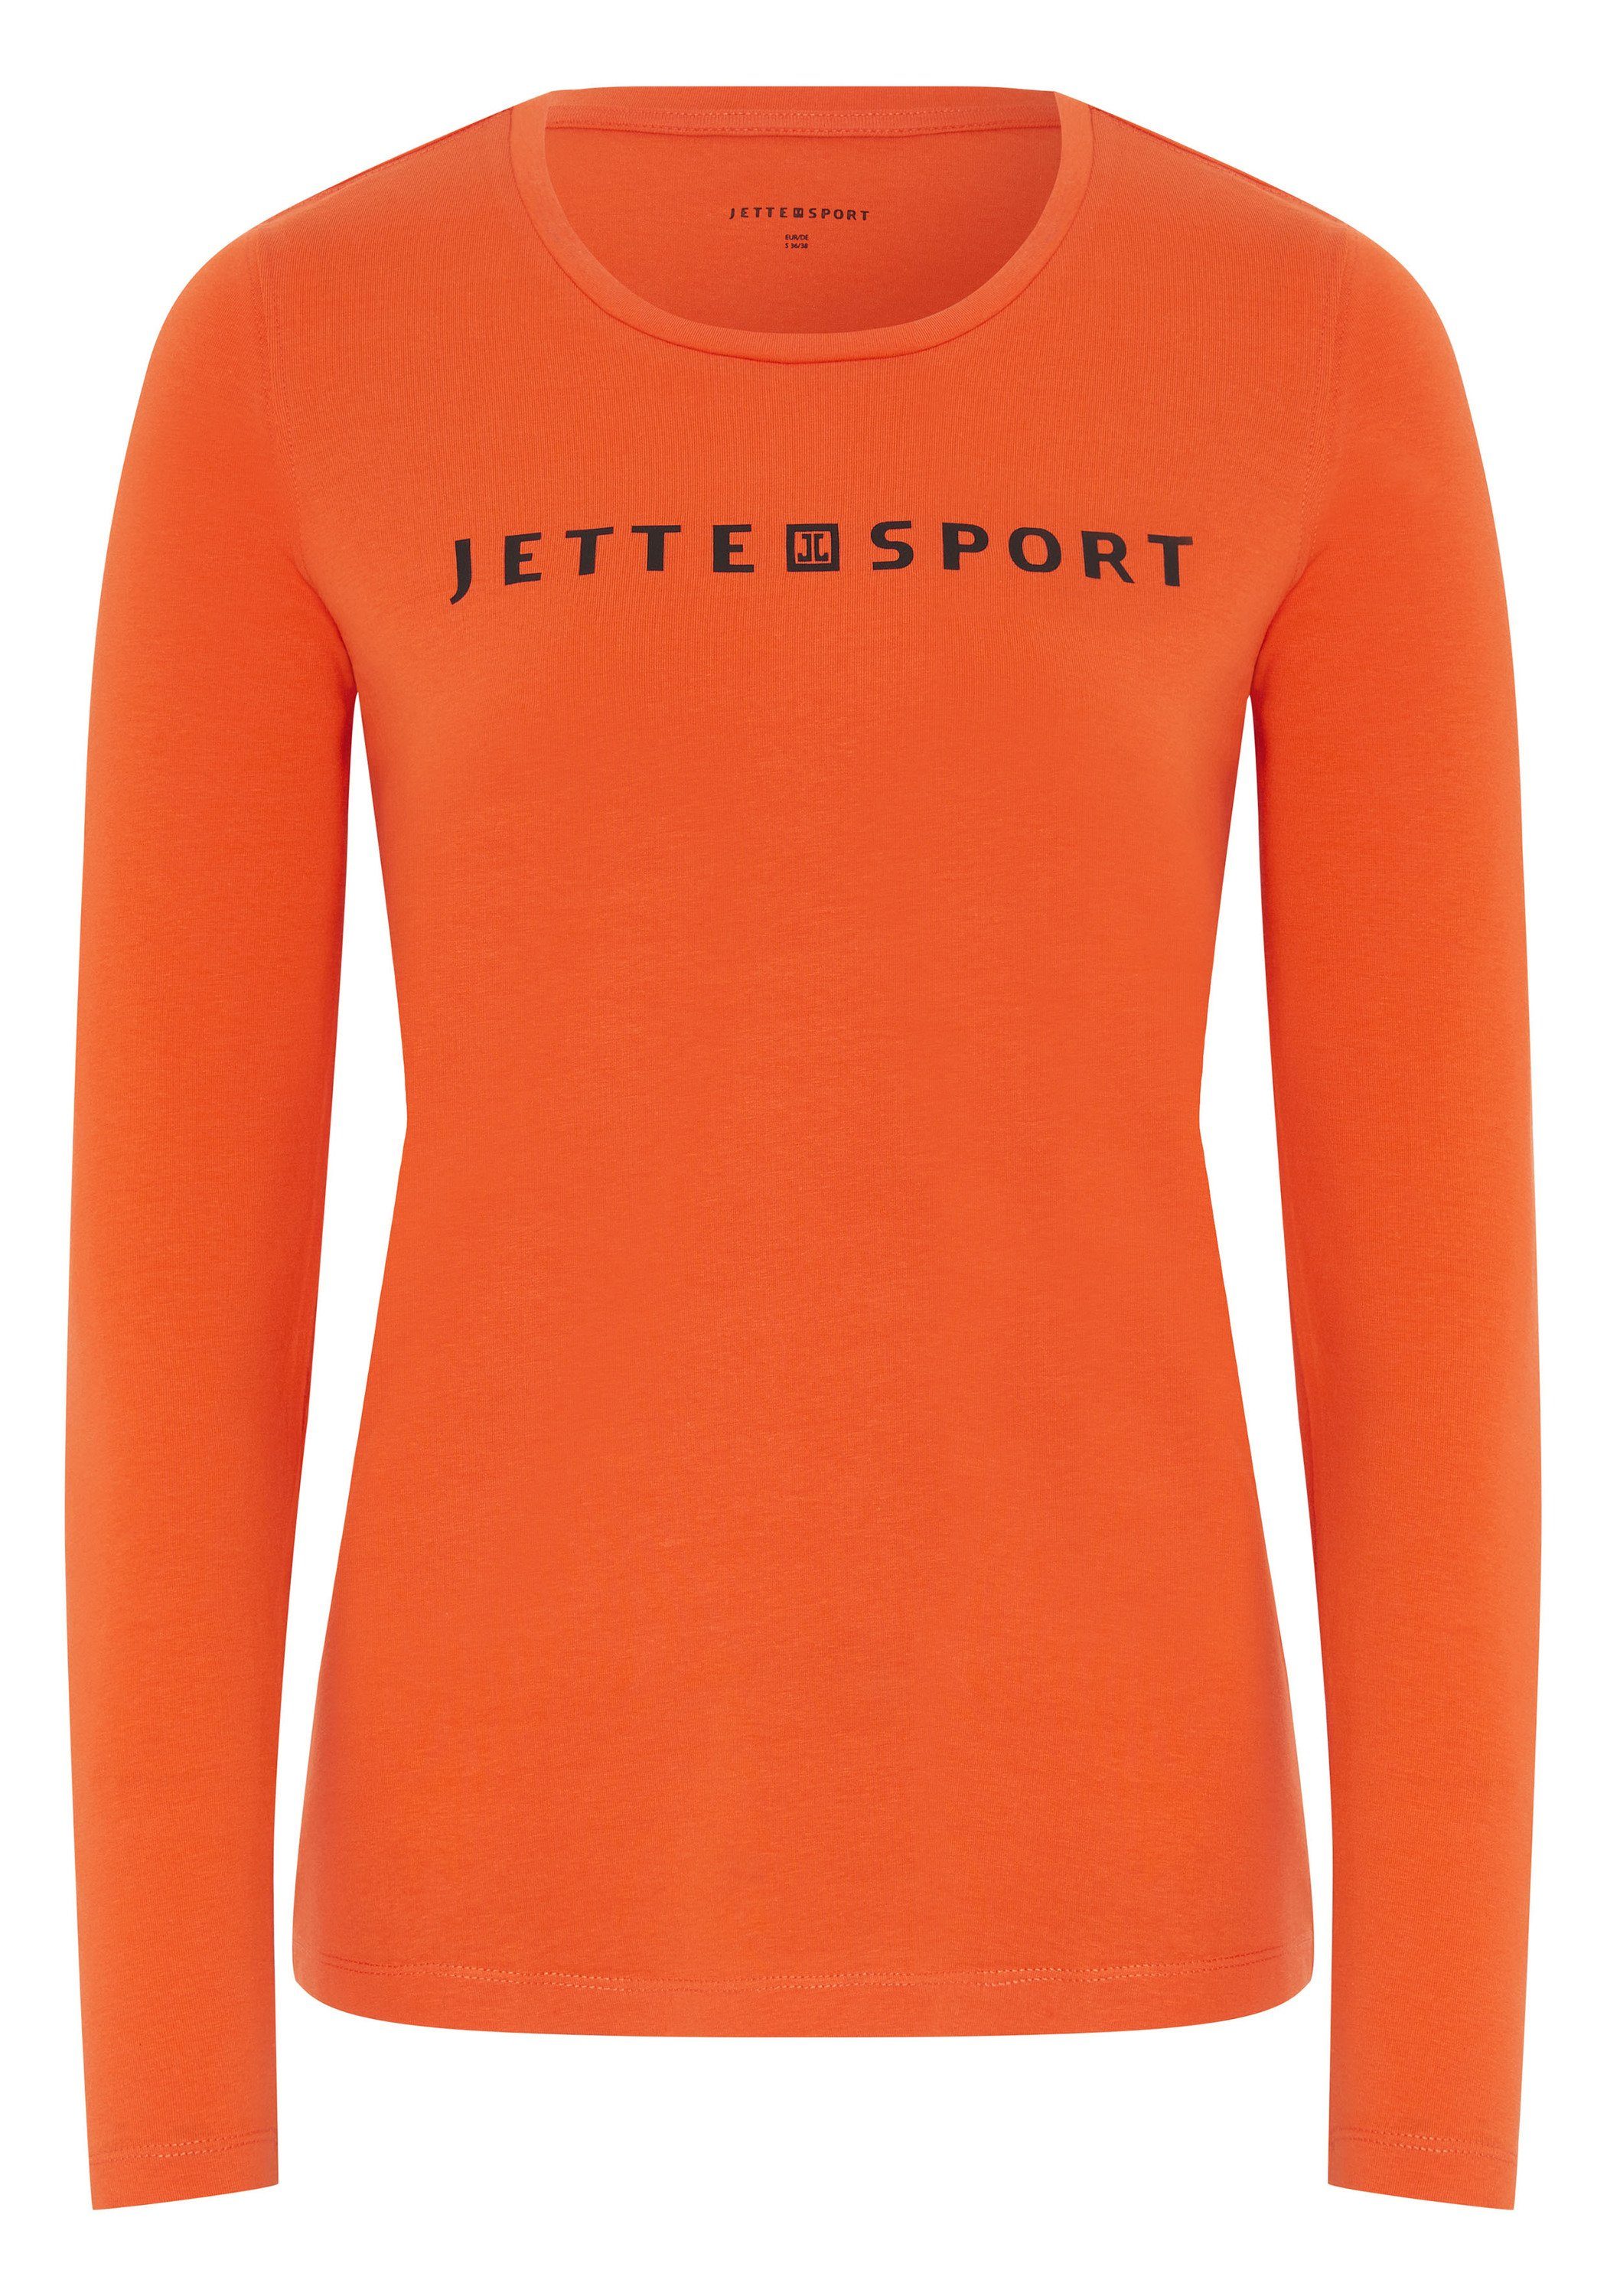 Jette Label-Druck SPORT Sport Flame JETTE Langarmshirt 17-1462 mit